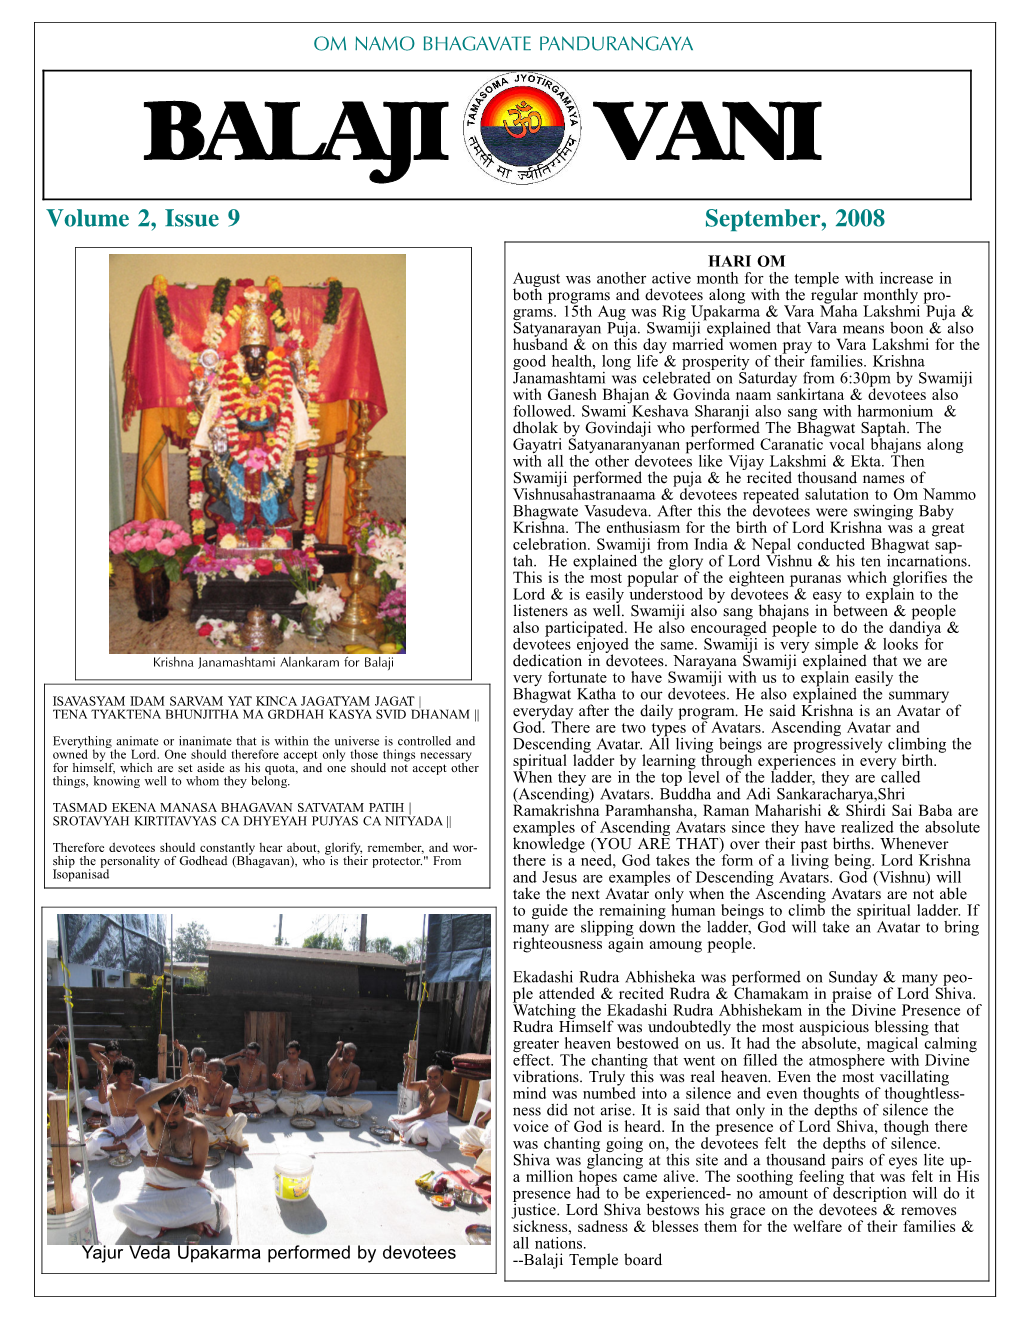 BALAJI VANI Volume 2, Issue 9 September, 2008